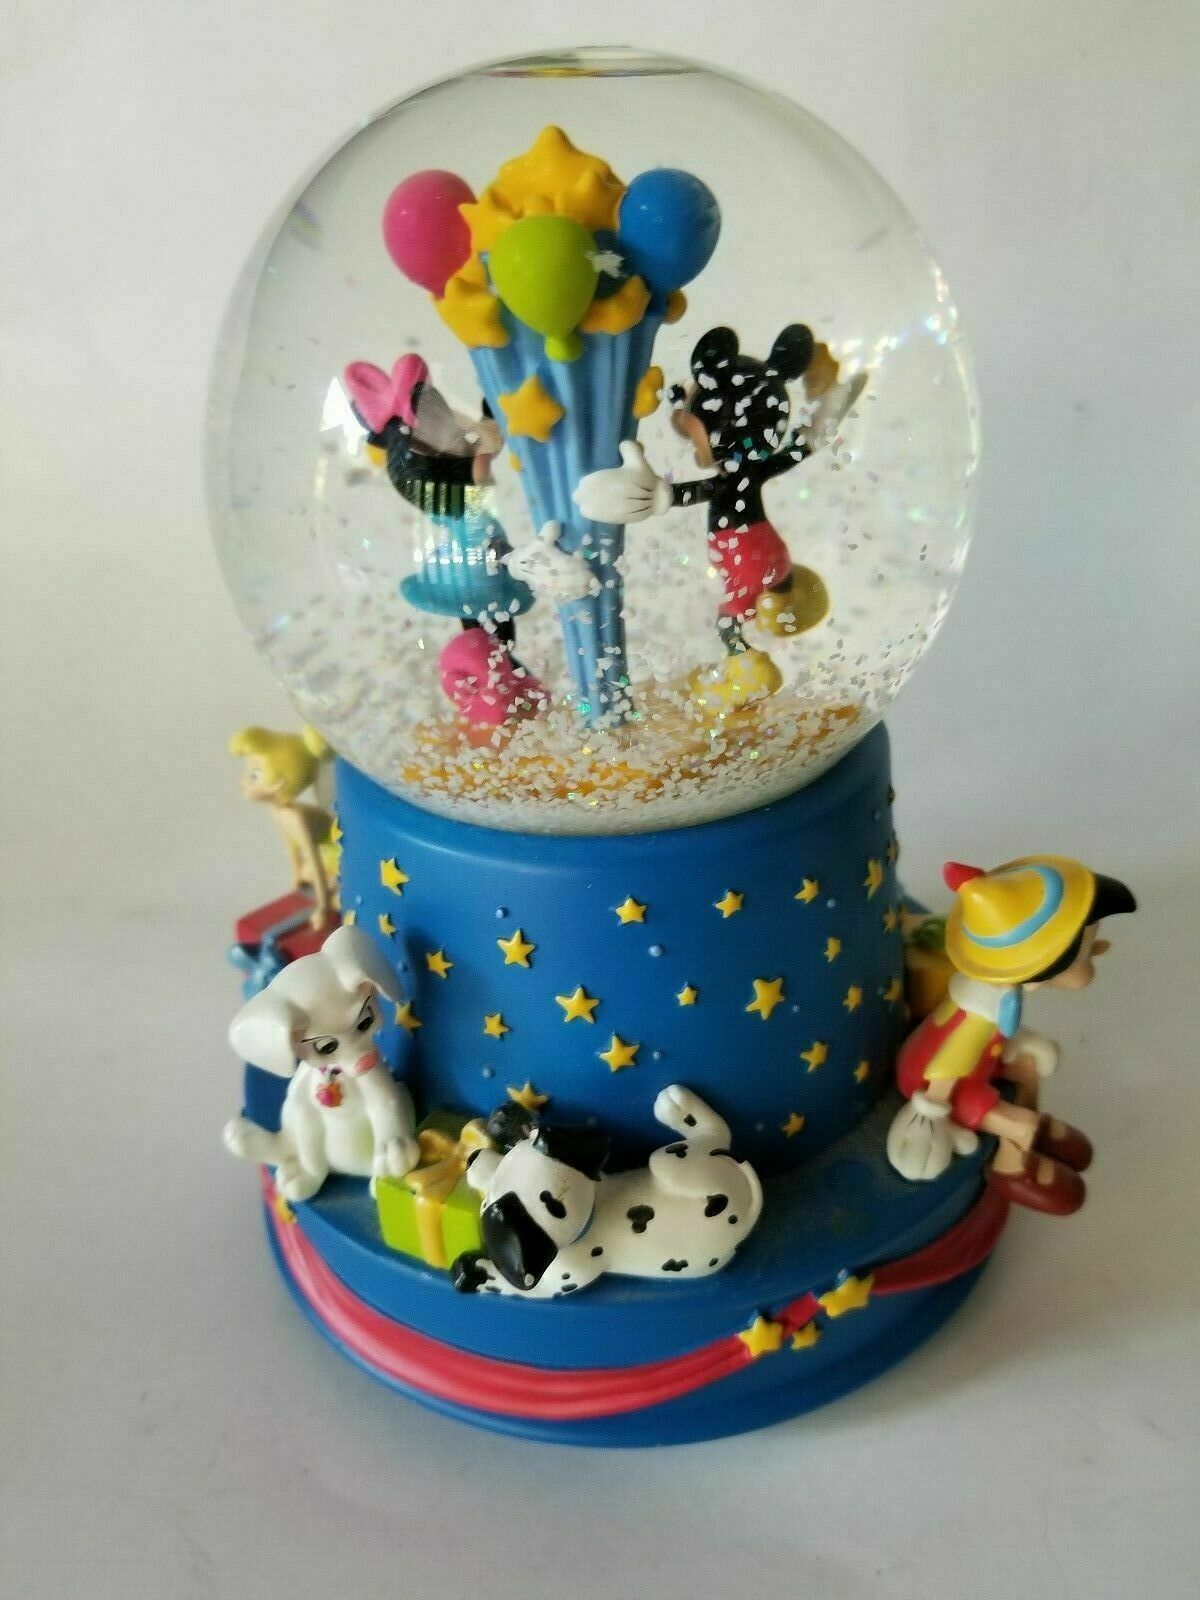 Disney Walt’s 100th Anniversary Musical Snow Globe When